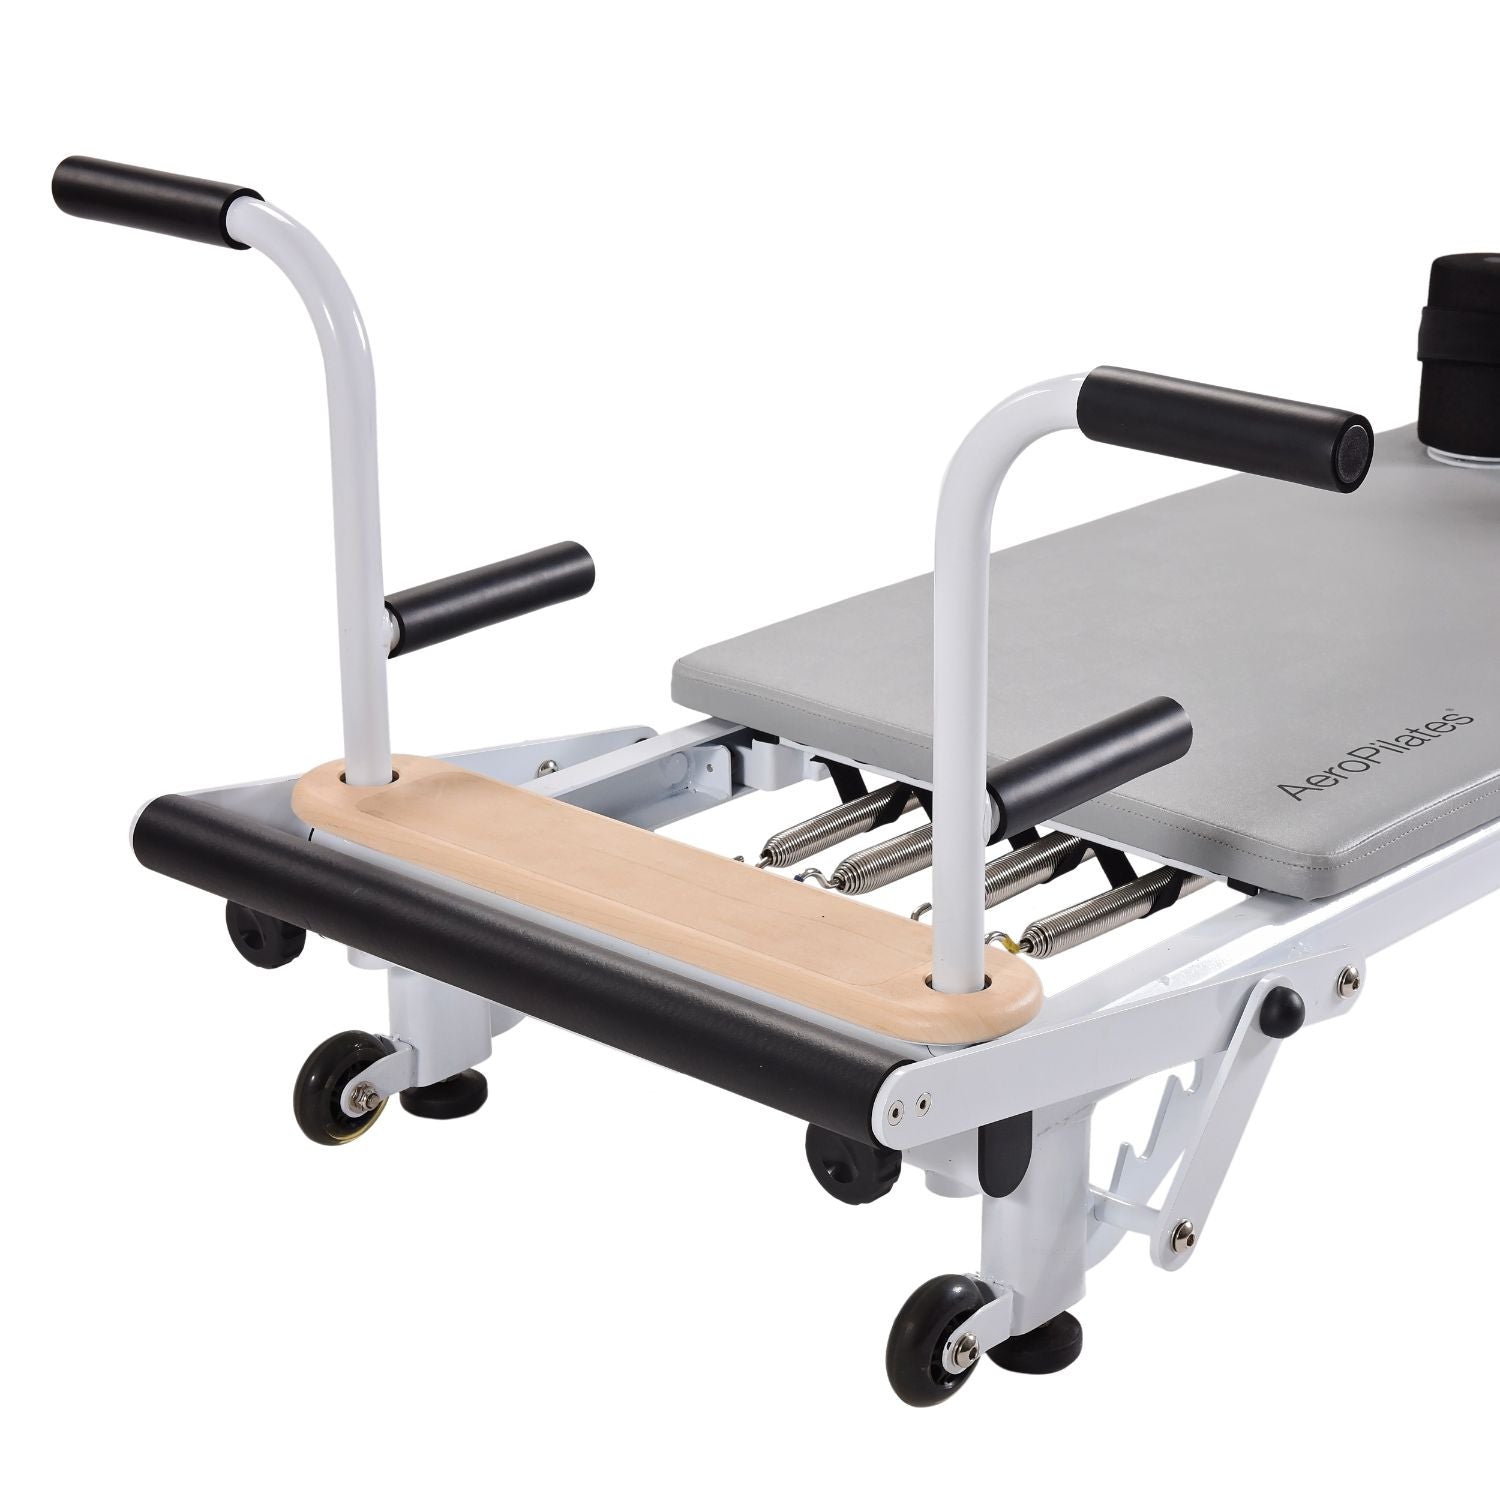 Buy AeroPilates Precision Plank Bars with Free Shipping – Pilates